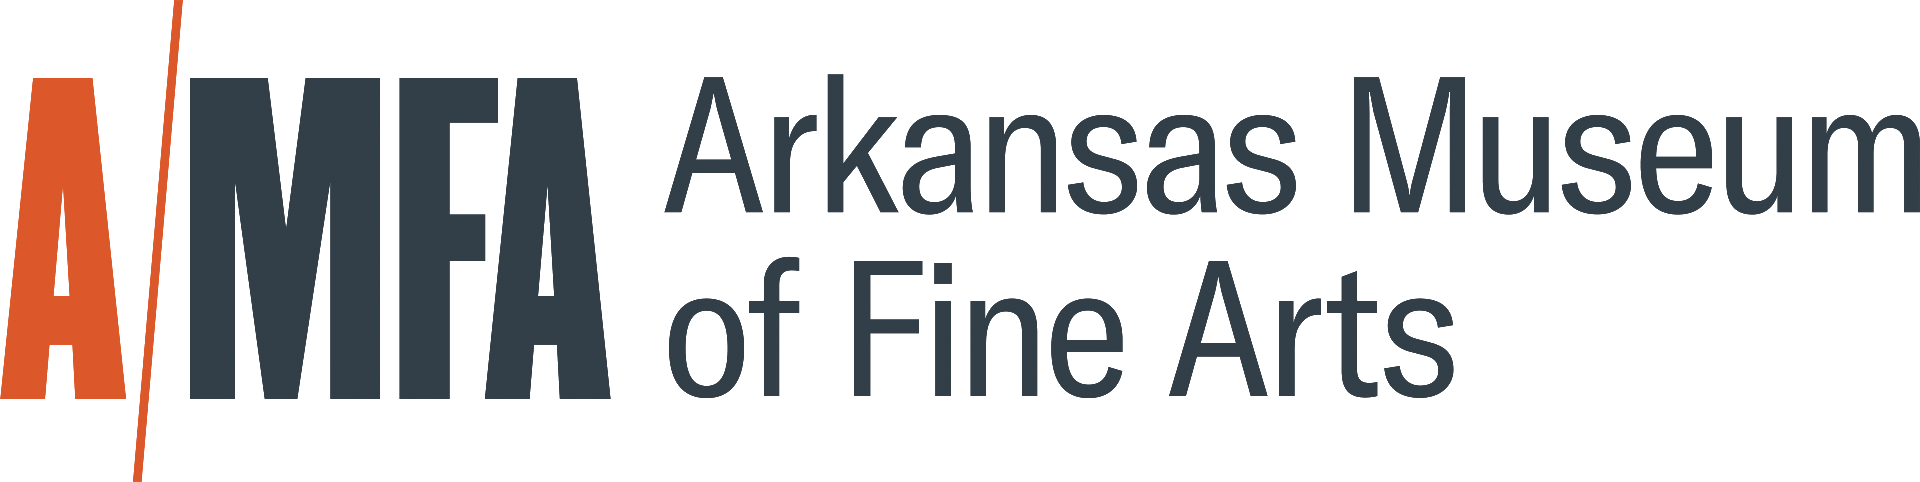 Arkansas Museum of Fine Arts logo